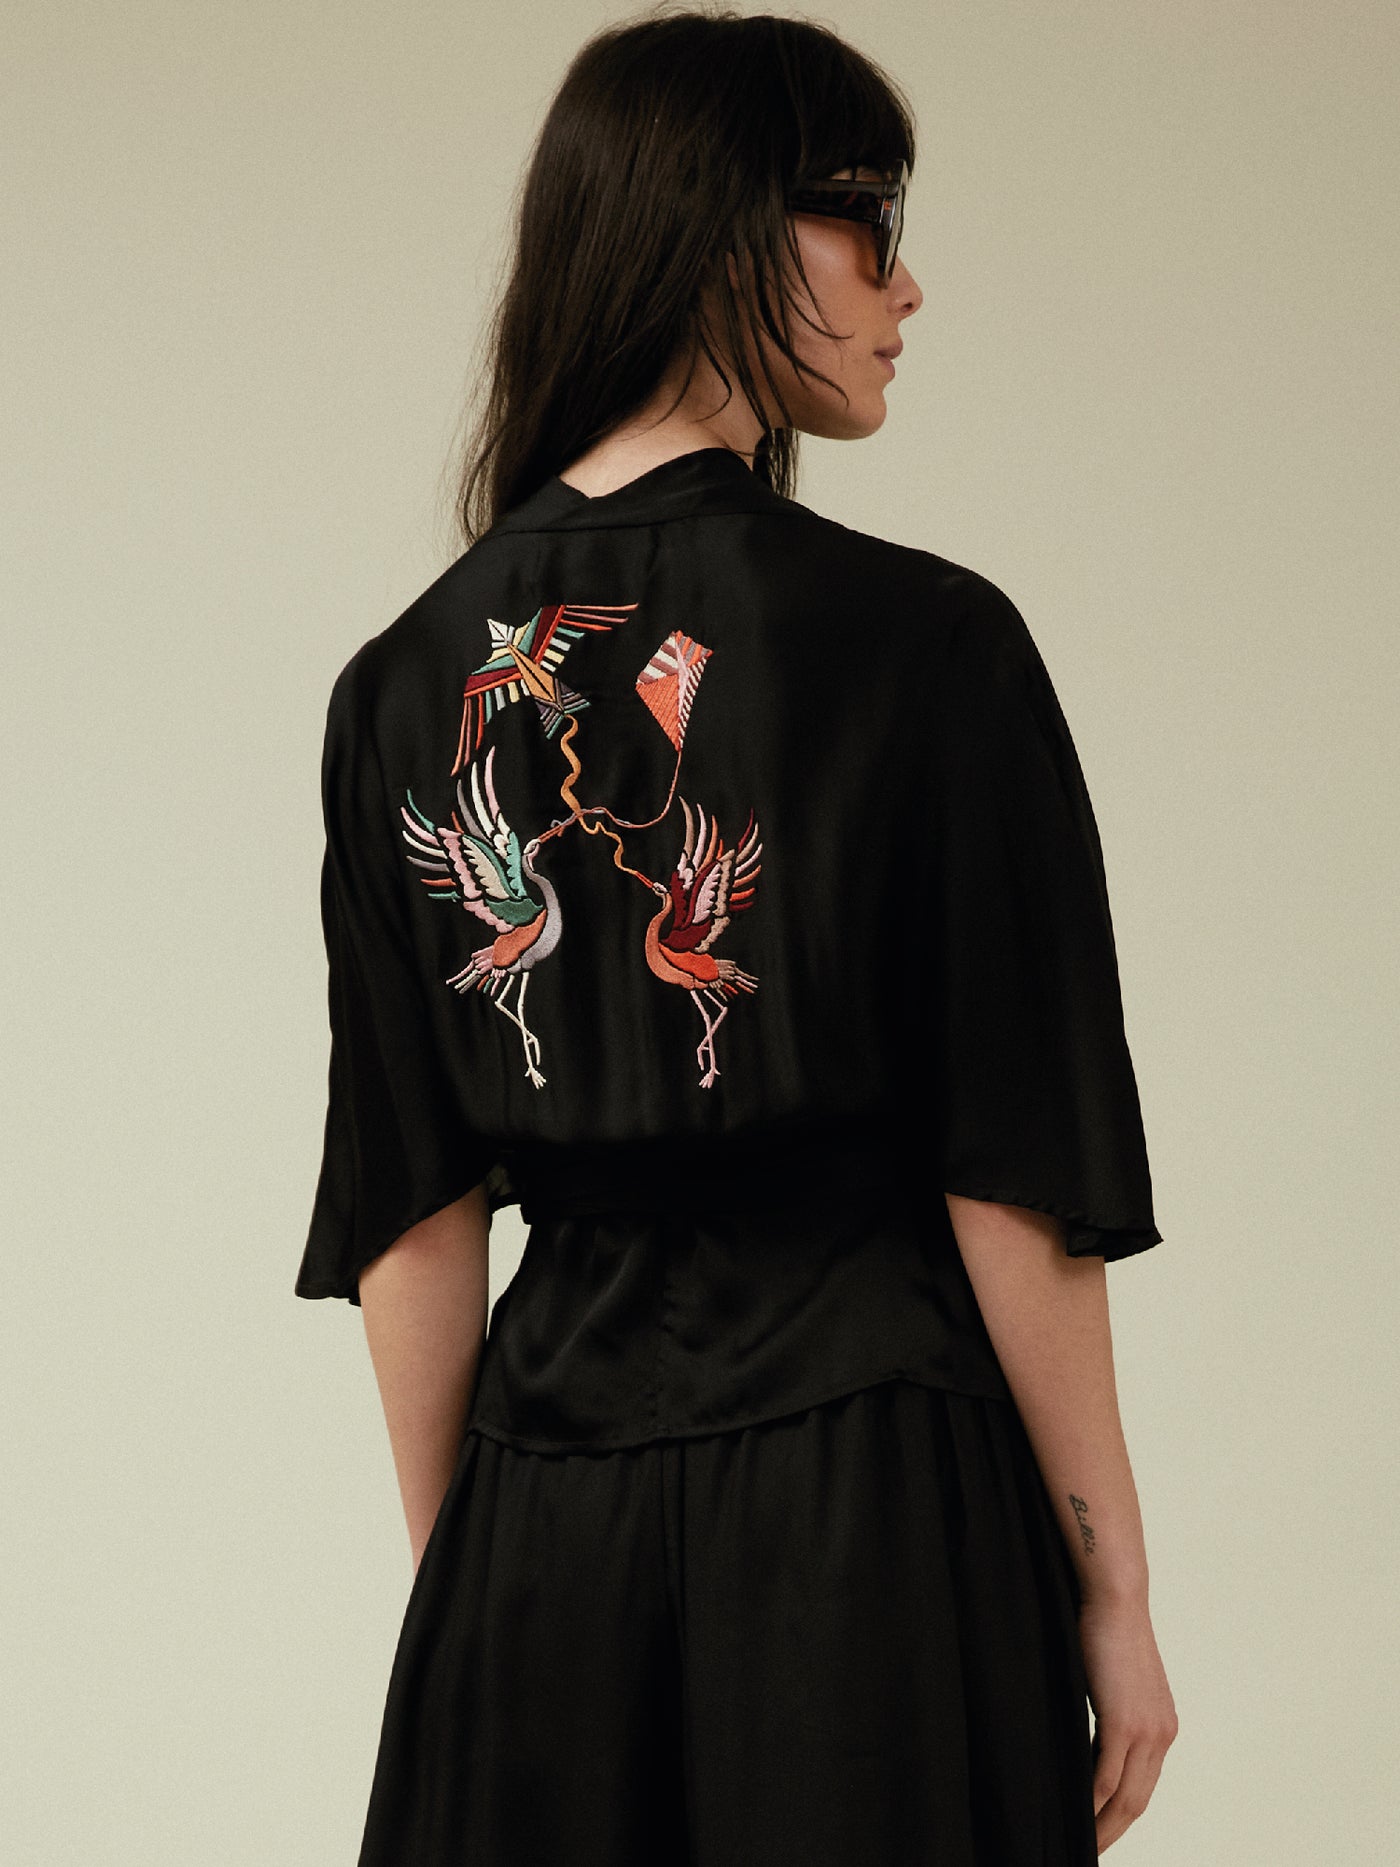 Gloria cape blouse black embroidered